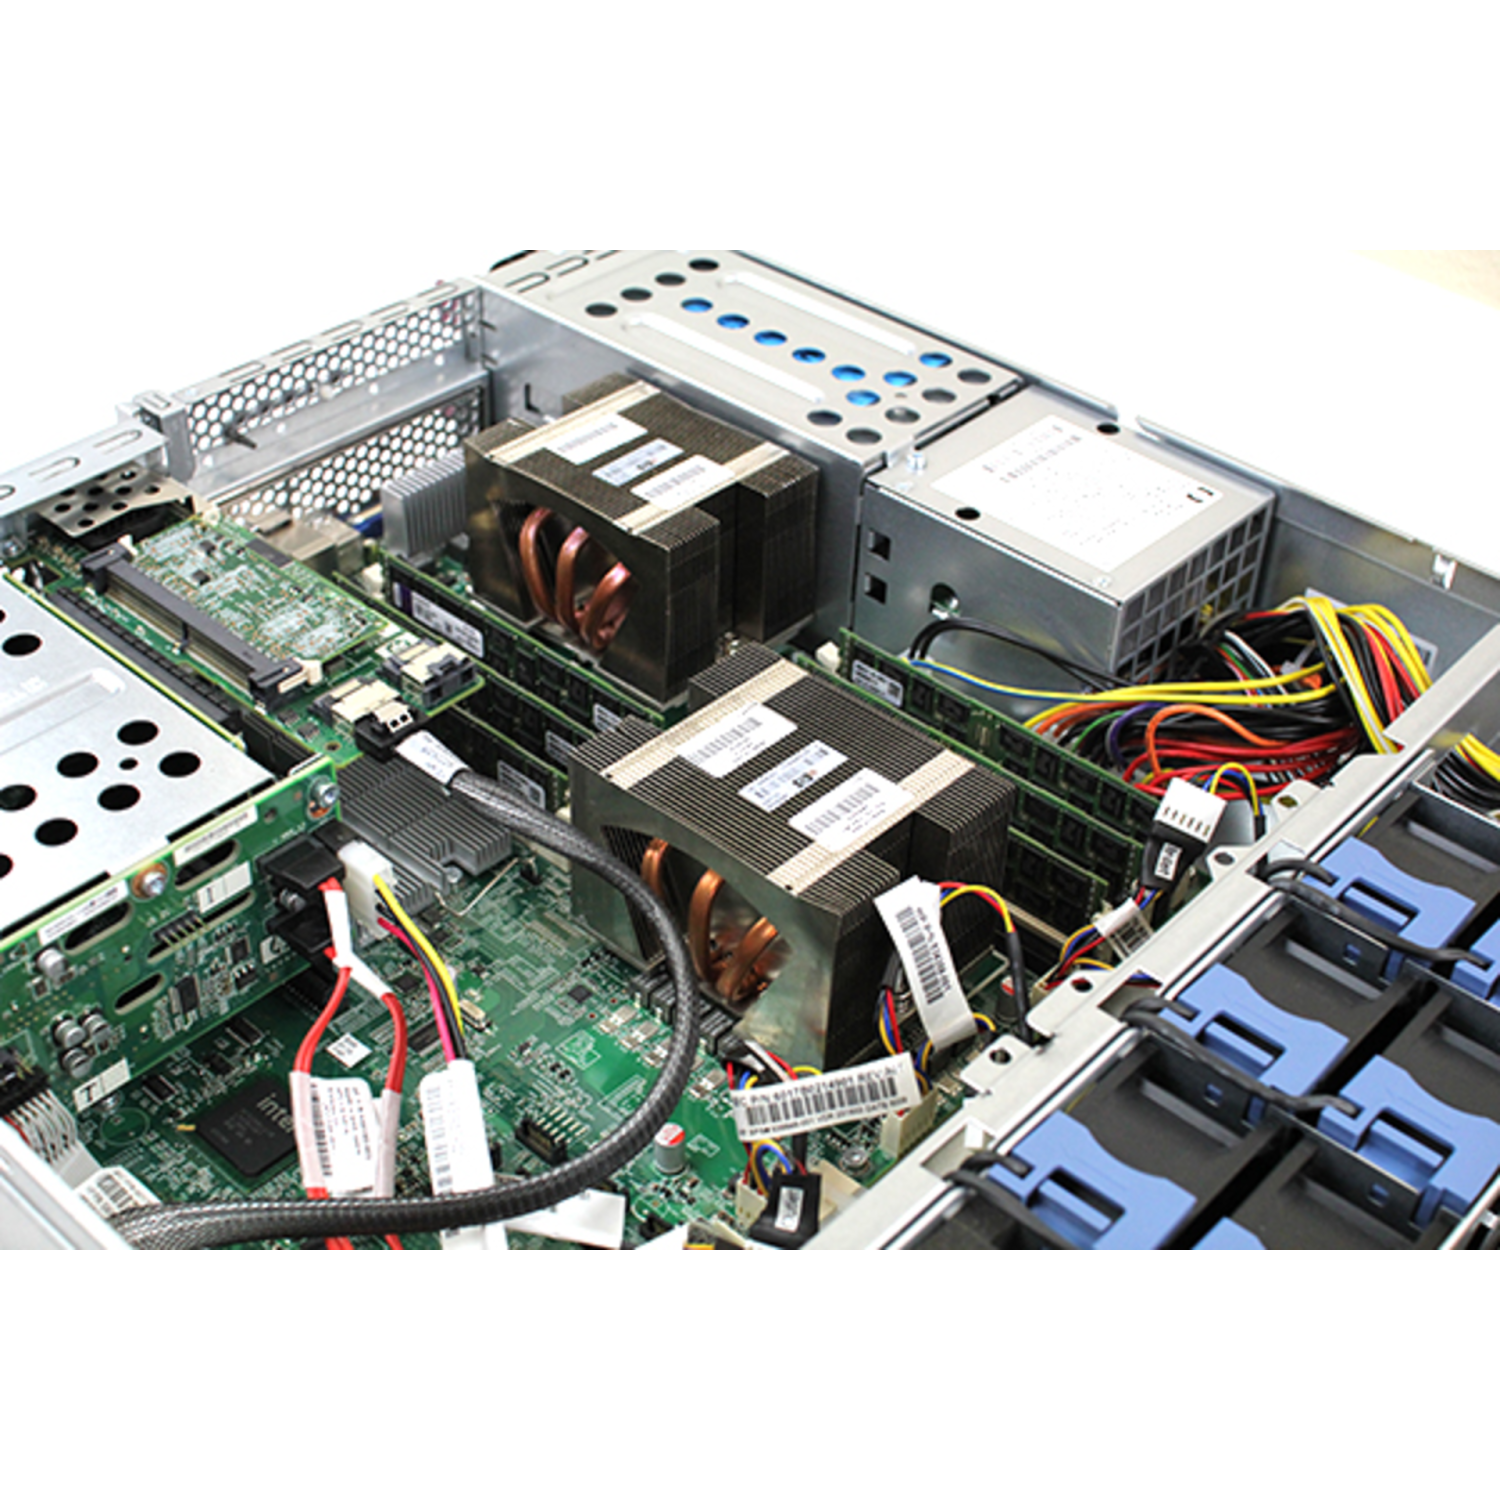 Сервер HP ProLiant DL180 G6, 2 процессора Intel 6C E5645 2.4GHz, 24GB DRAM